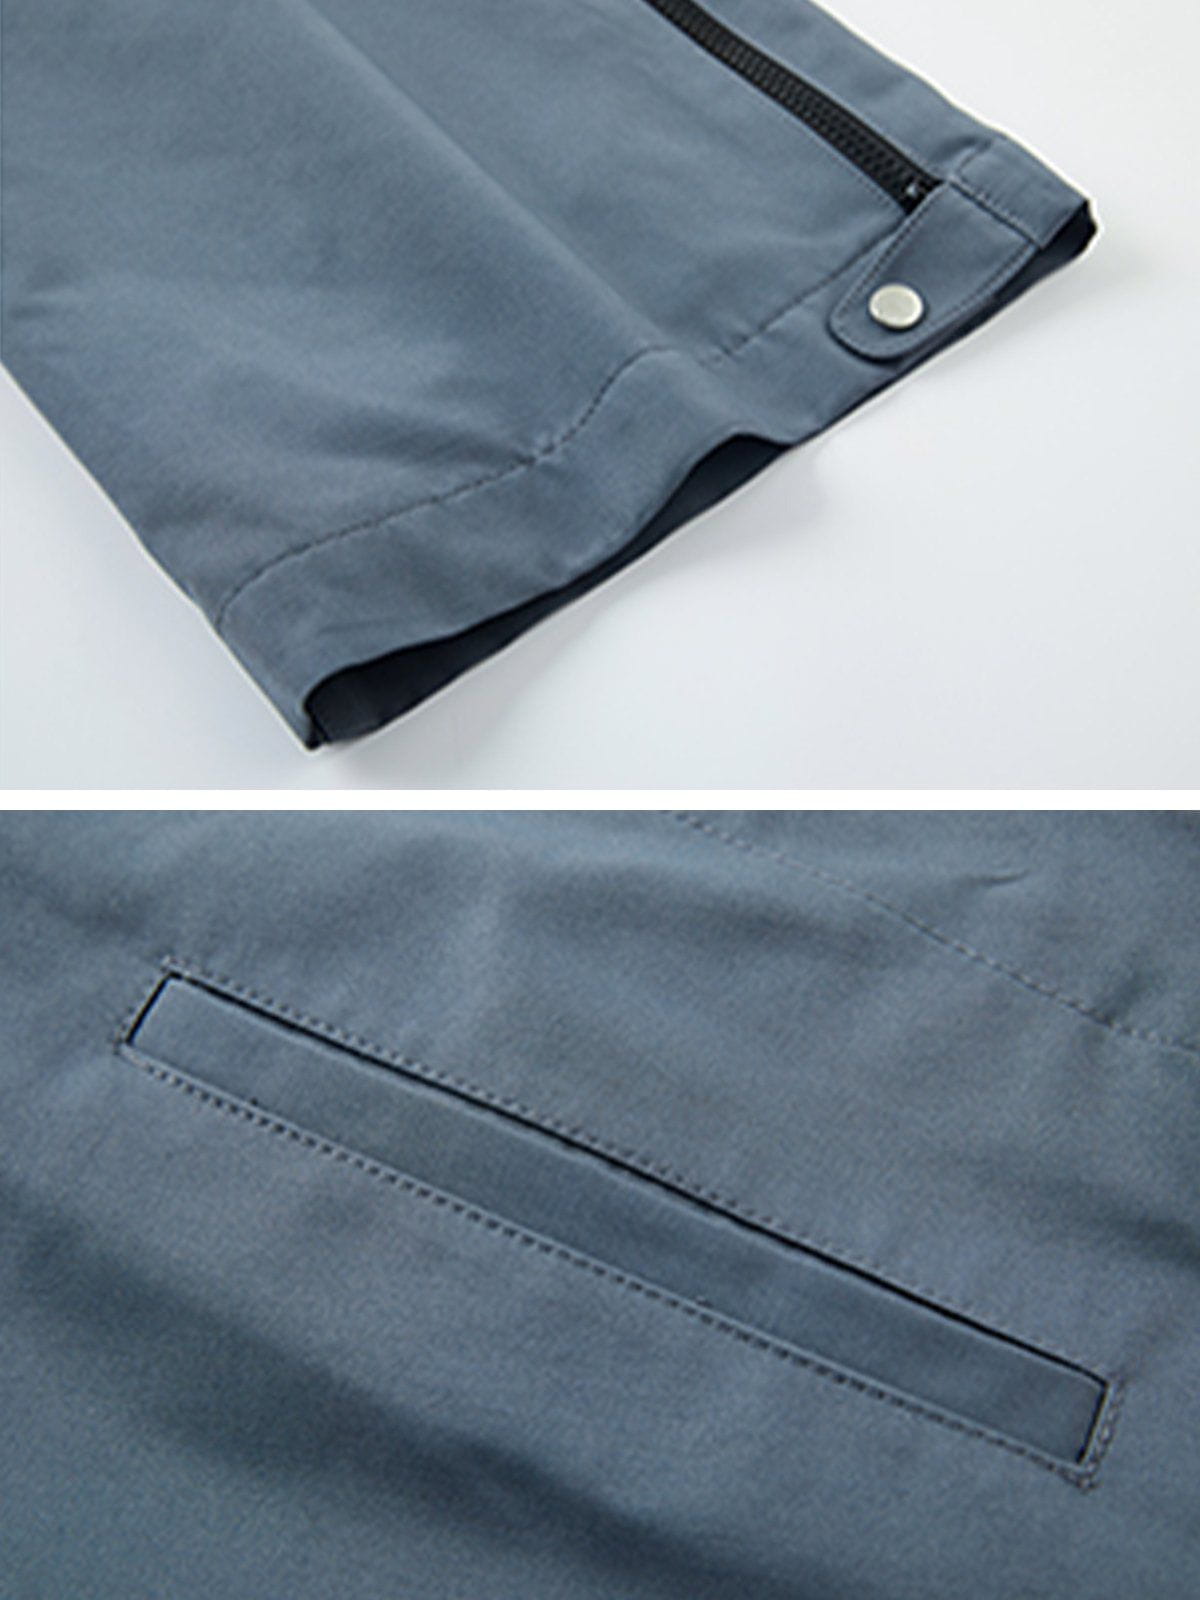 Eprezzy® - Side Zip Pleated Webbing Pants Streetwear Fashion - eprezzy.com